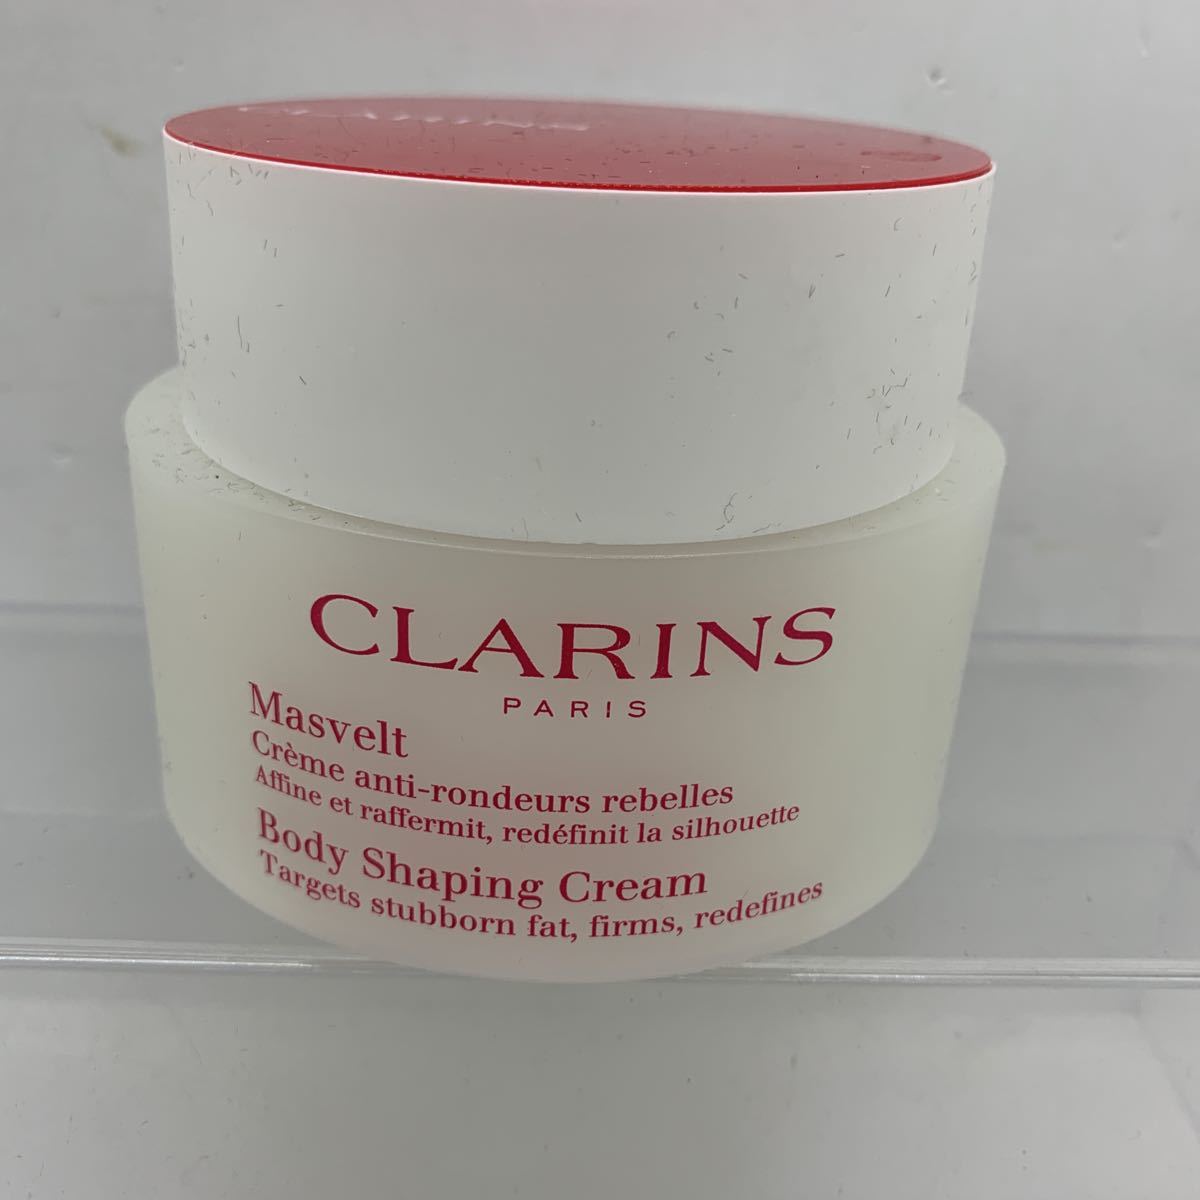 CLARINS cream claim trout veruto body for cream 22040541